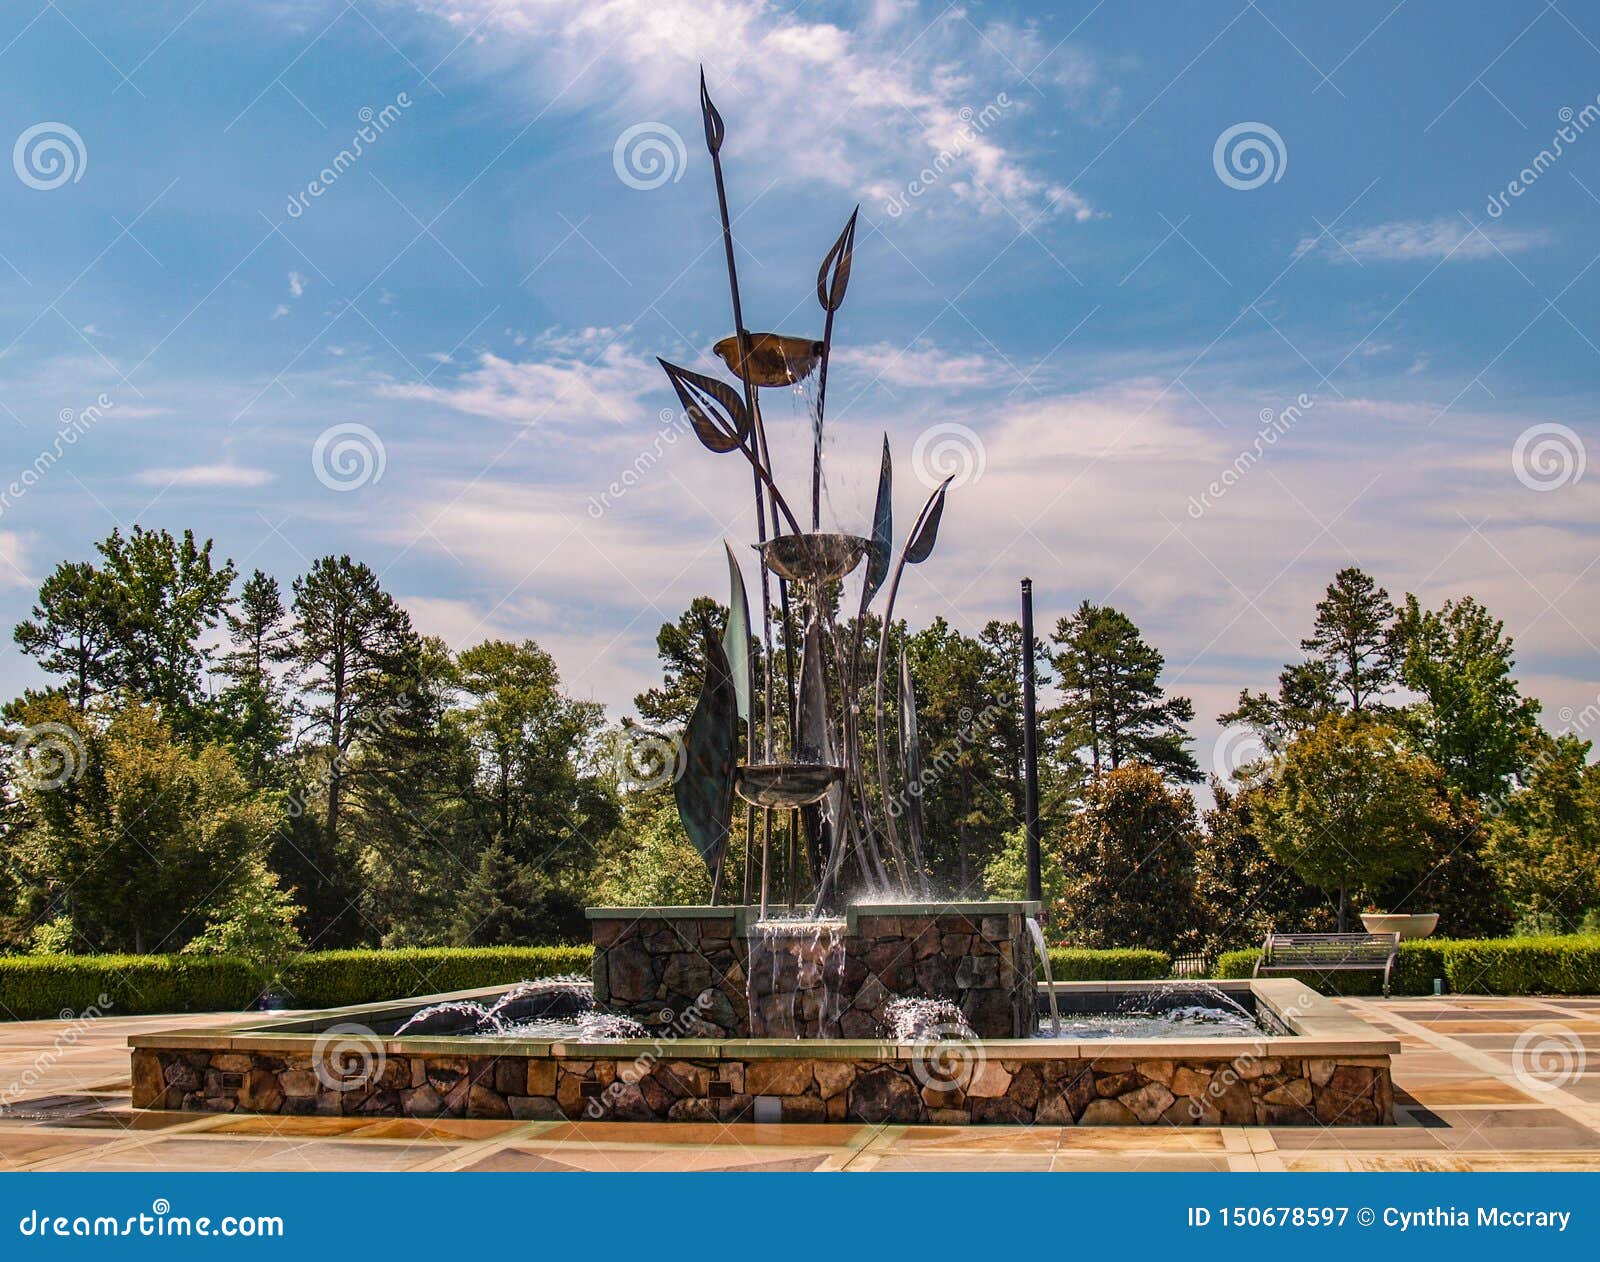 Water Fountain At Gateway Gardens In Greensboro North Carolina